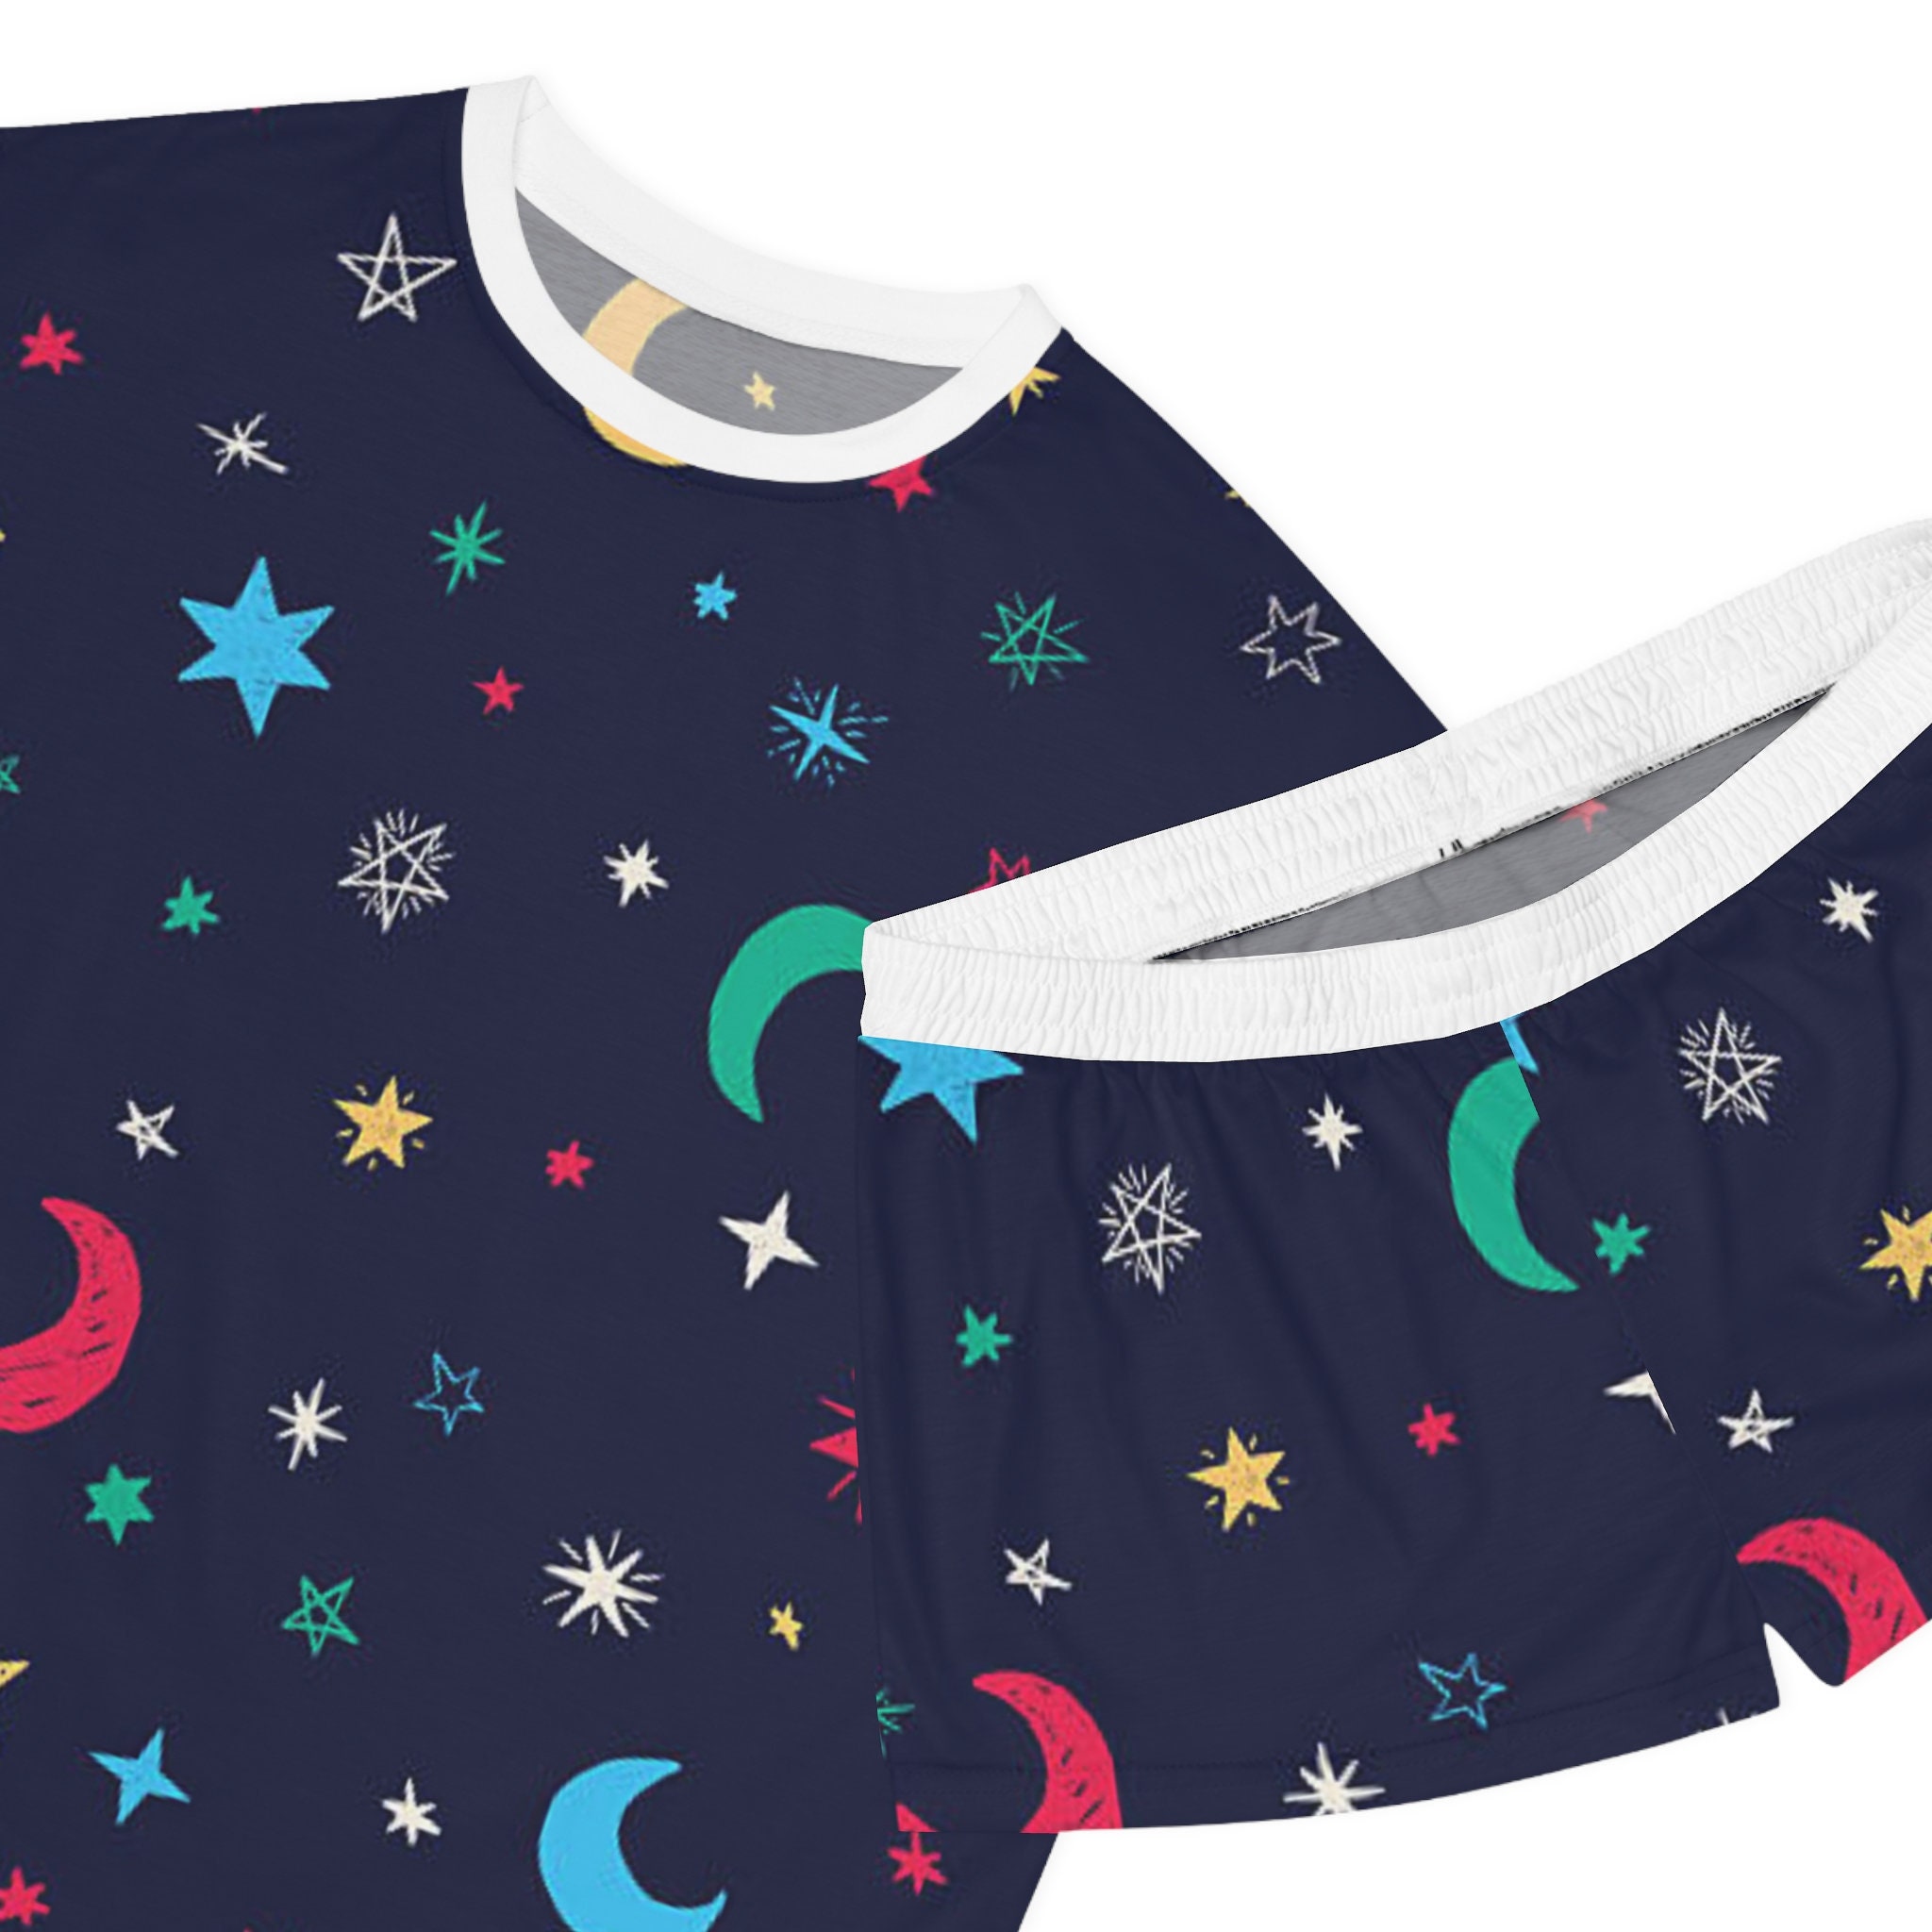 Stars And Moon Pajamas Set, Women Sleepwear